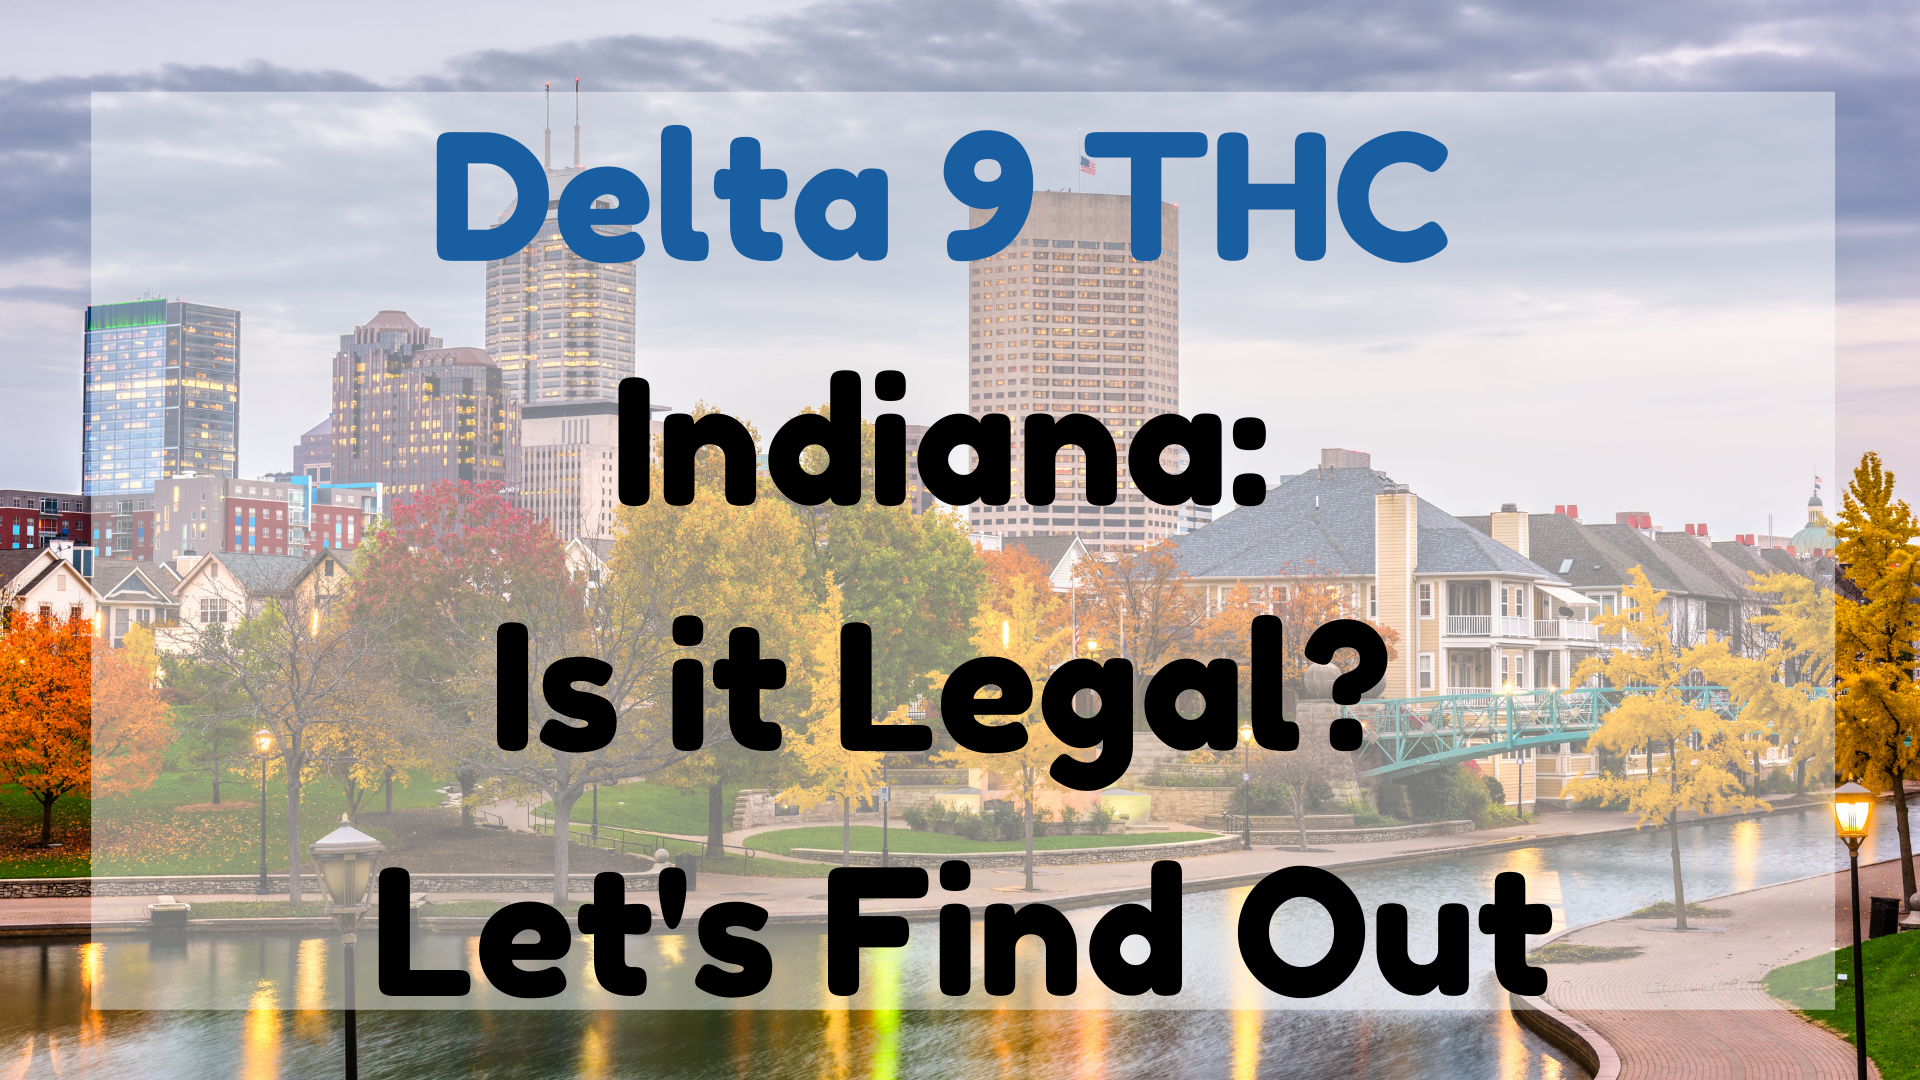 Delta 9 THC Indiana